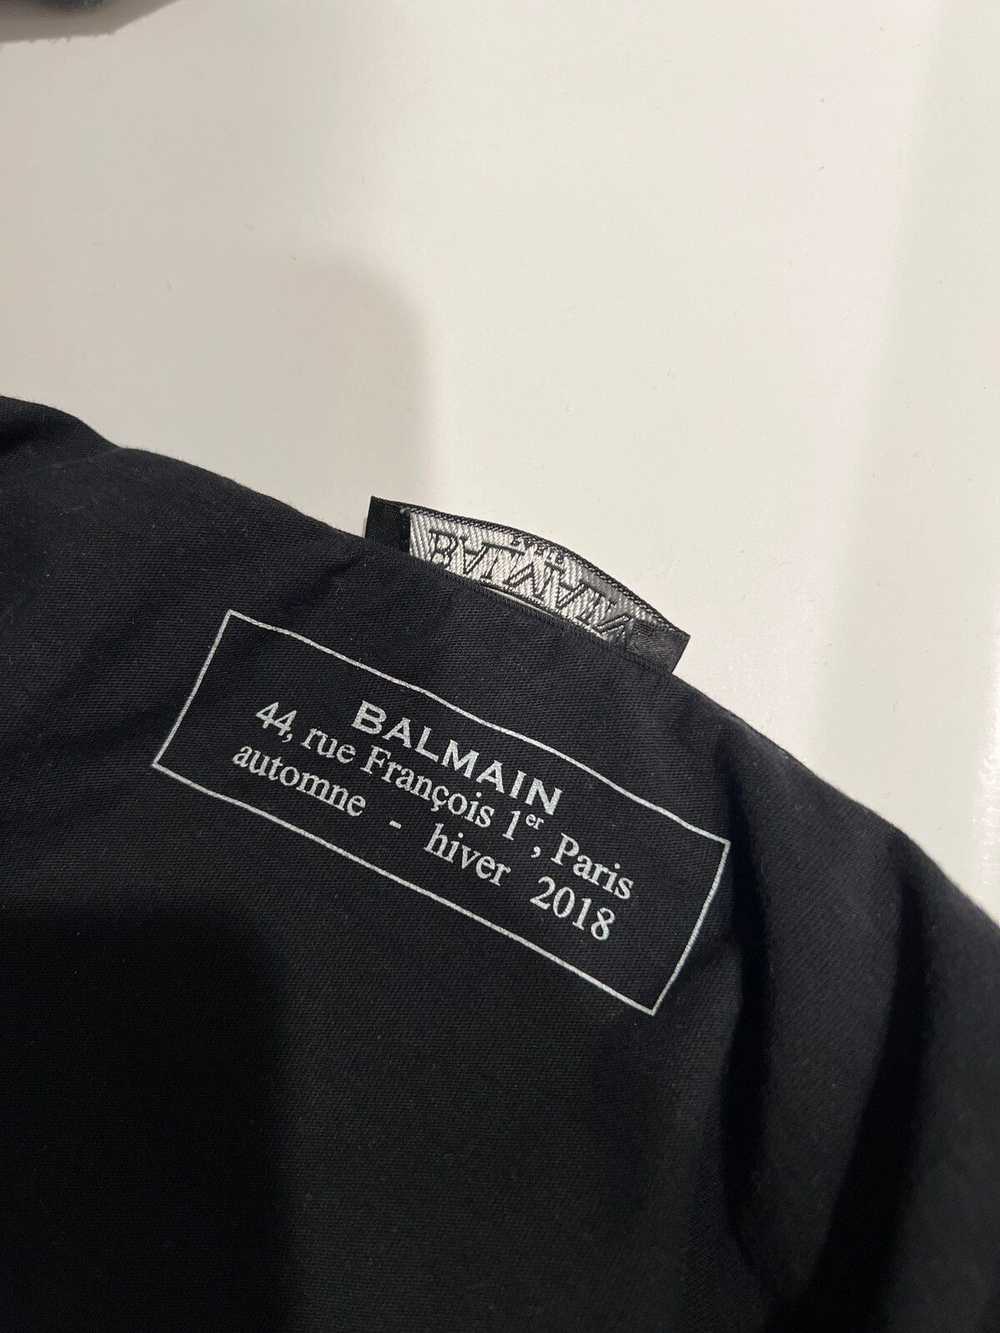 Balmain Balmain Logo Black T Shirt - image 7